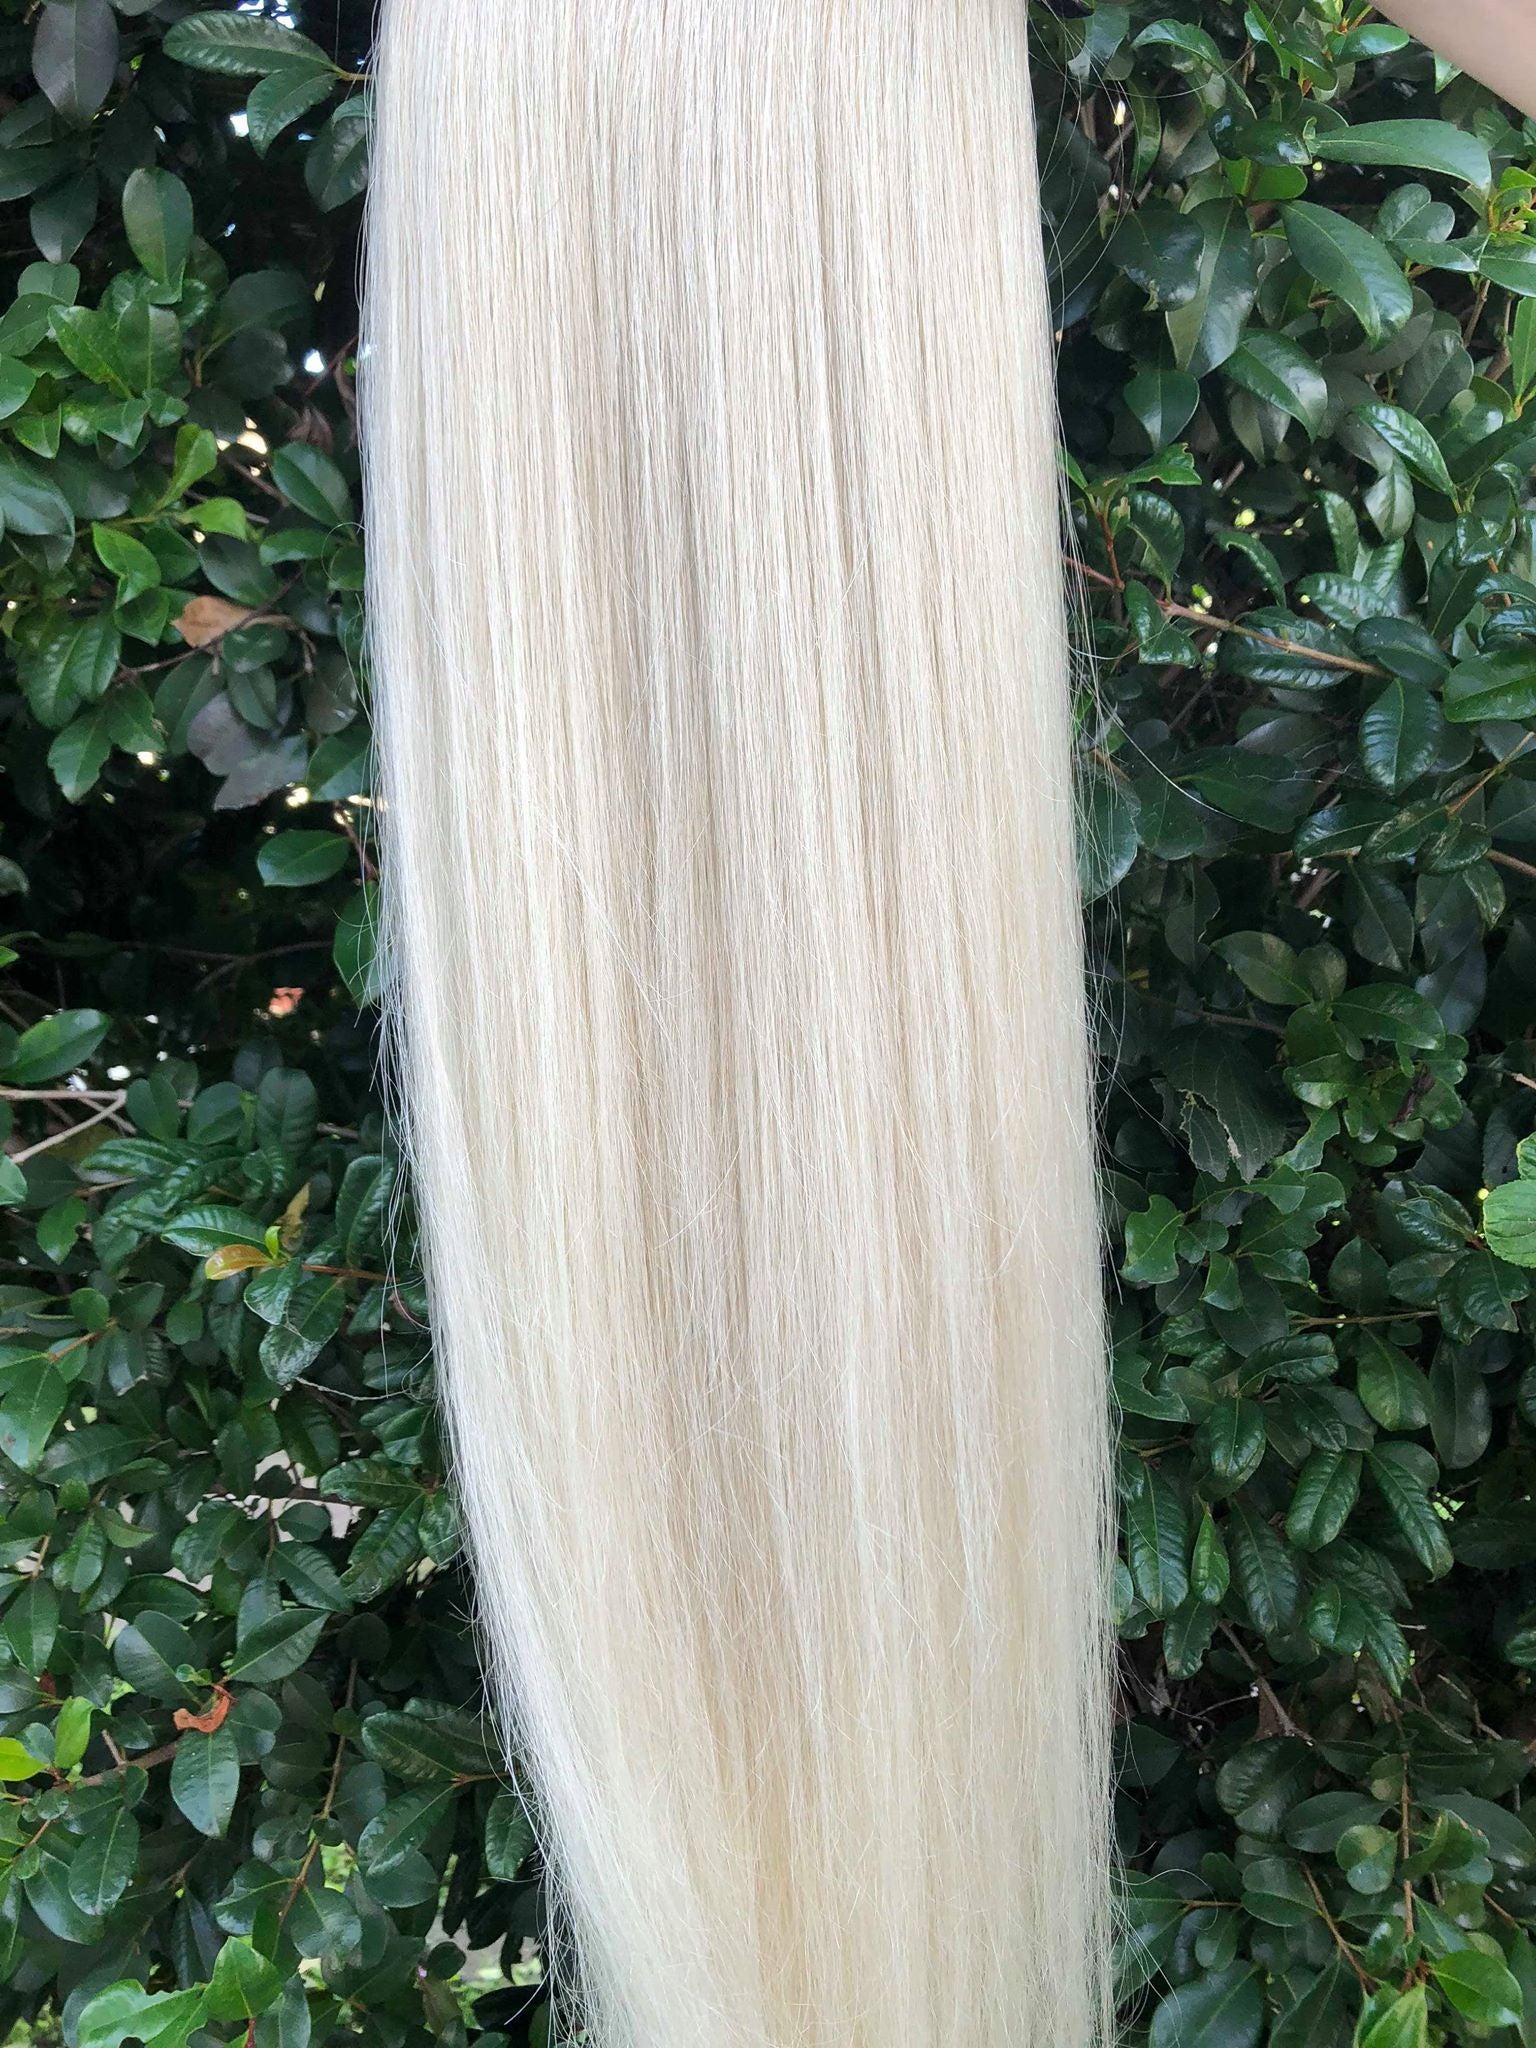 Vanilla Blonde #60 Tape Hair Extensions 26inch 20pcs - Half Head, Blonde hair looks, Hair Extensions Gold Coast, Hair Extensions online, Cheap Hair Extensions, Good Quality Tape Hair Extensions